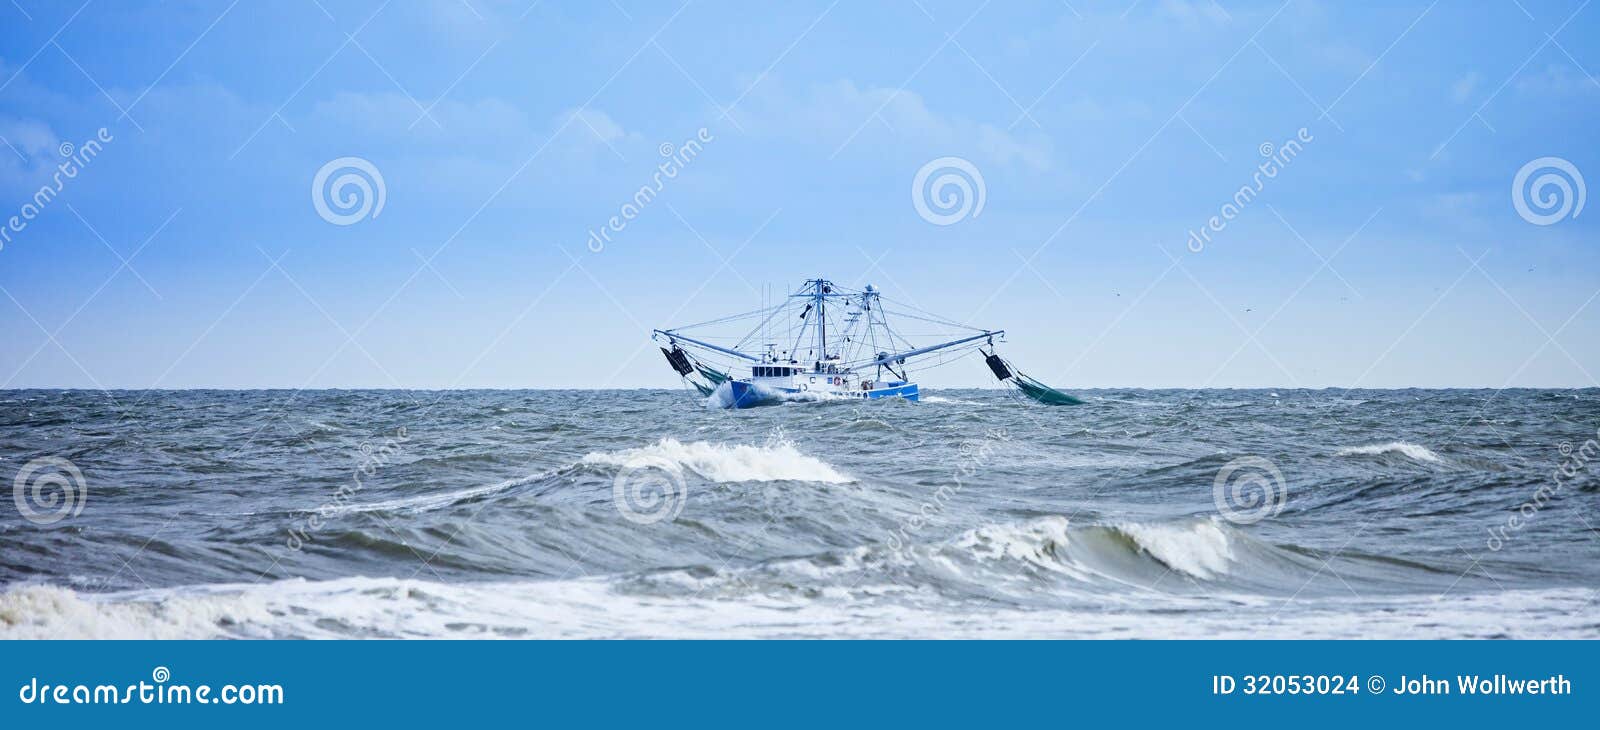 fishing boat fishing in rough seas